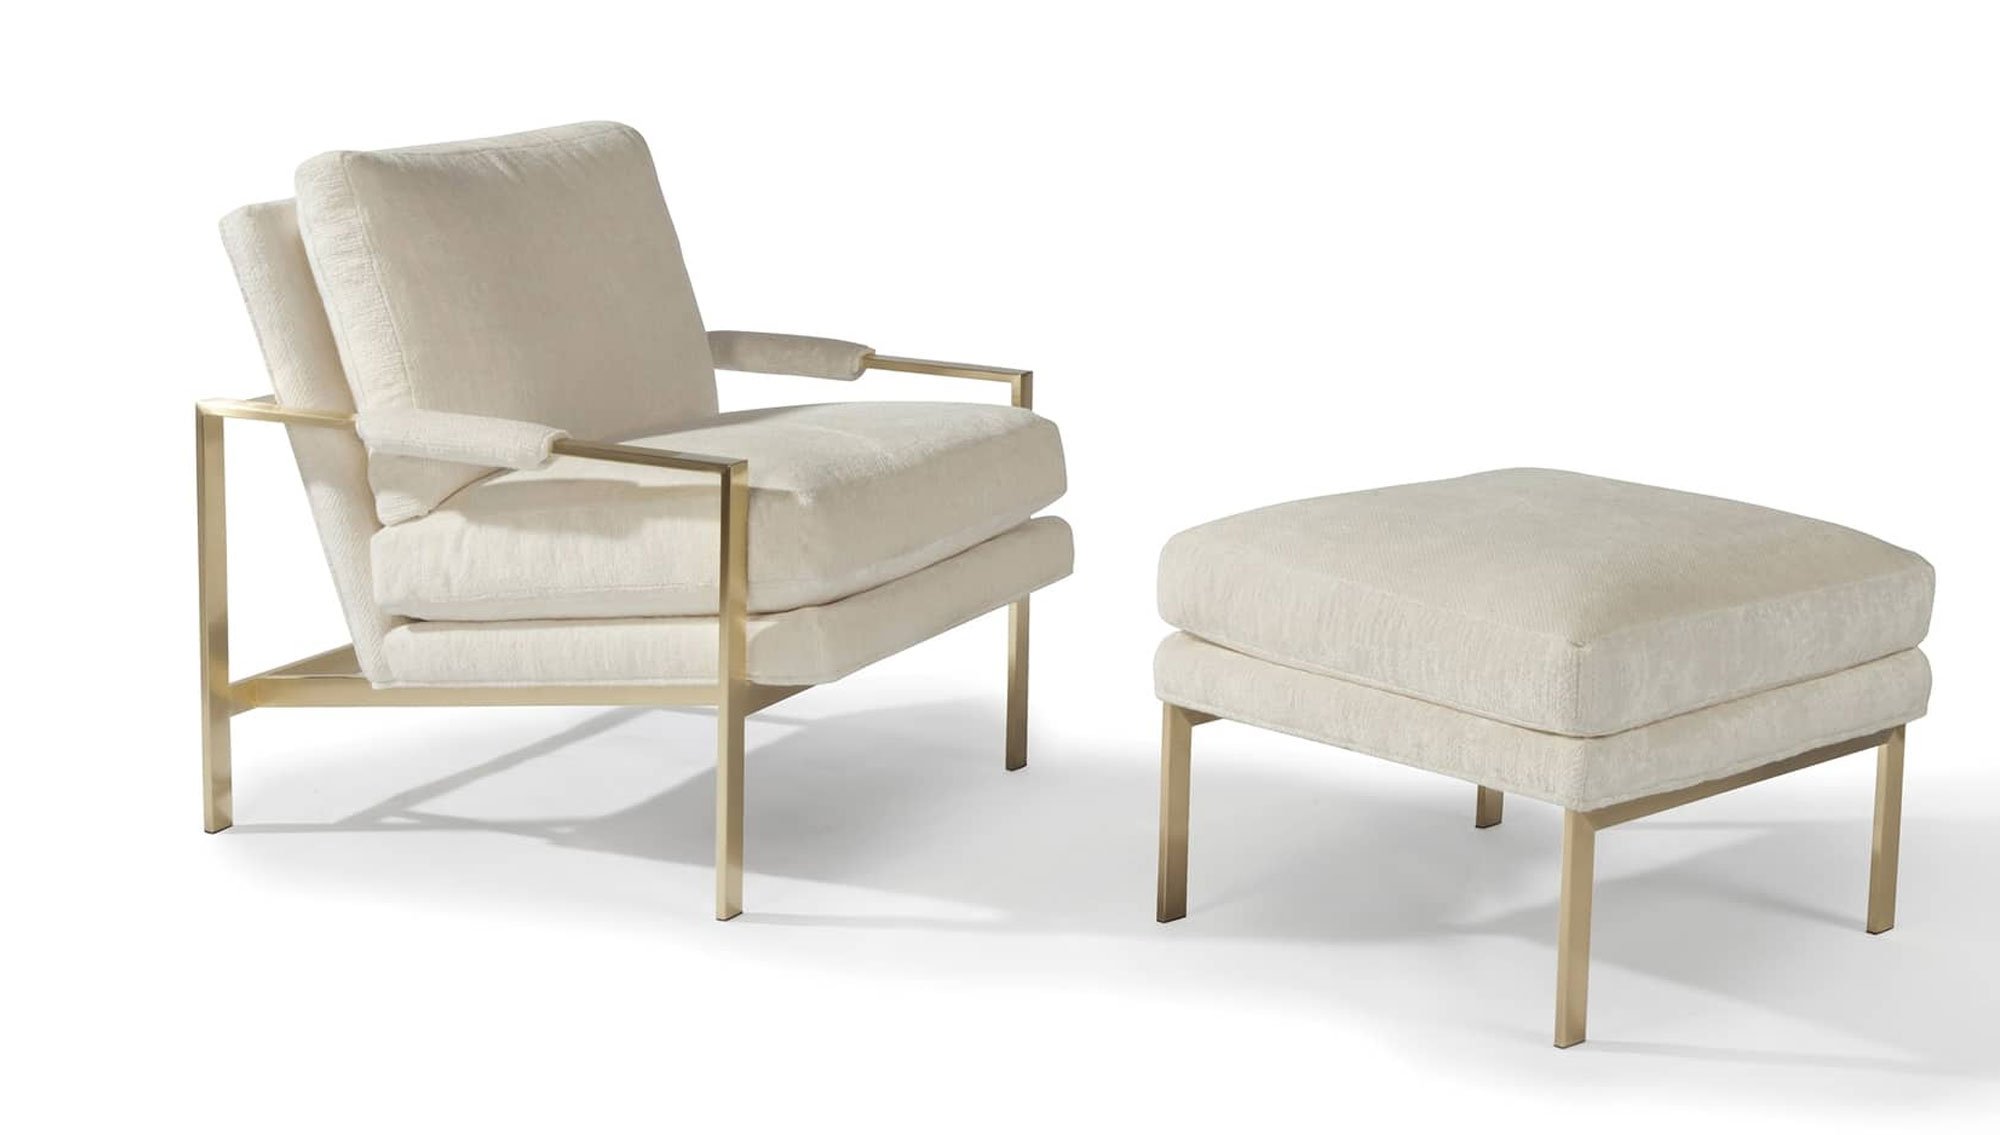 Thayer Coggin 951-103-SB Design Classic Chair in Satin Brass with 951-000 Ottoman